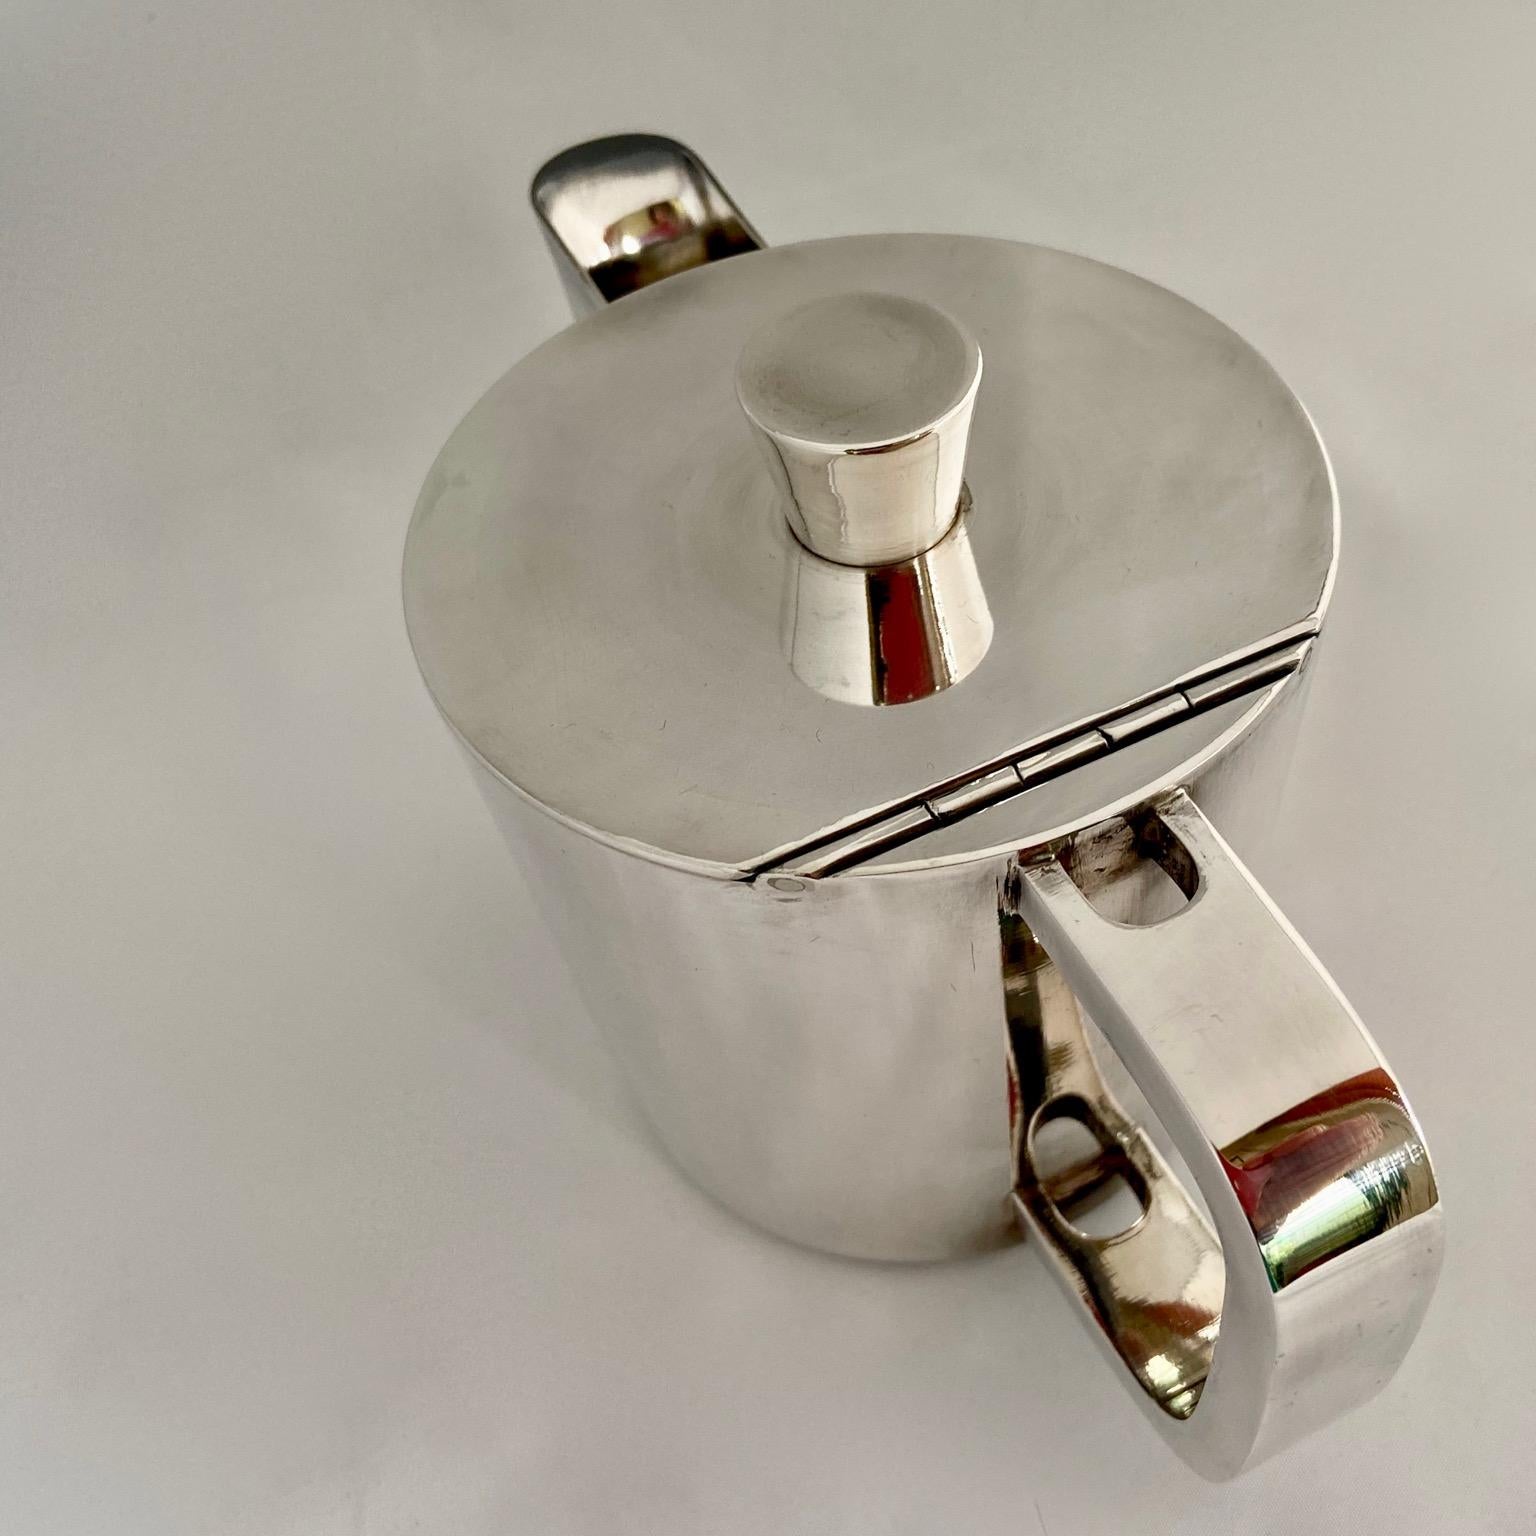 1950s coffee pot